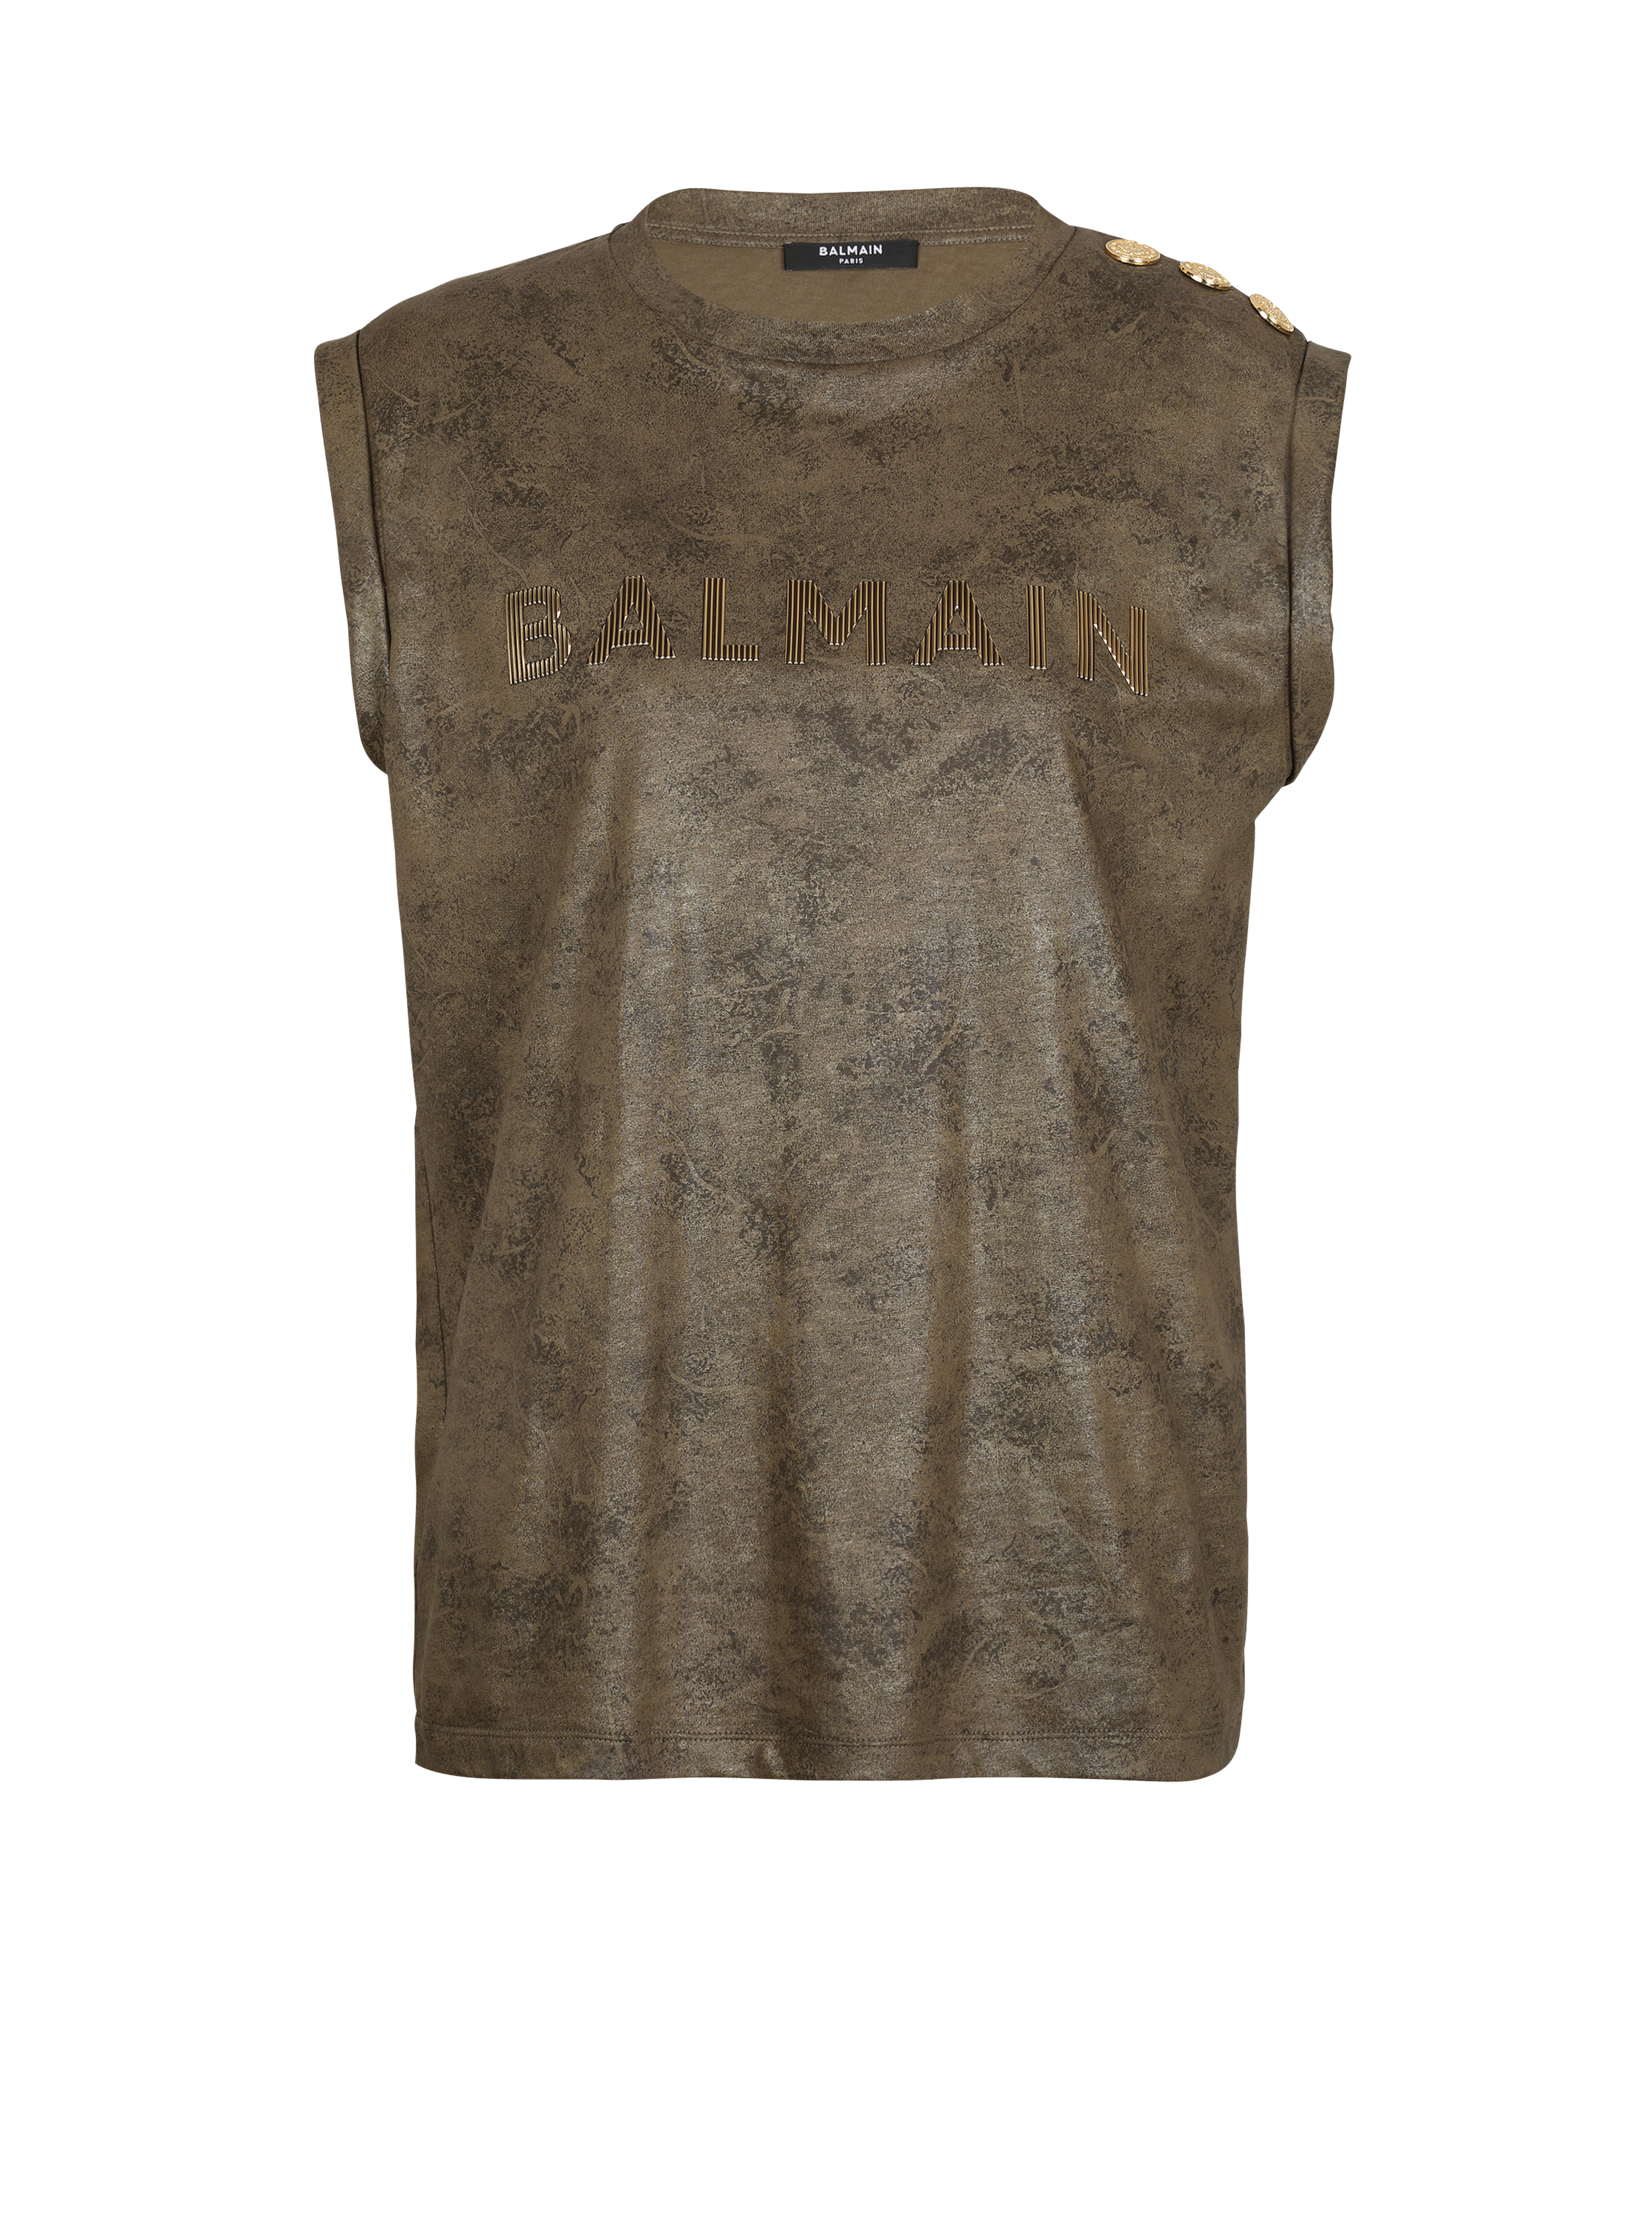 Eco-responsible cotton T-shirt with Balmain logo print, khaki